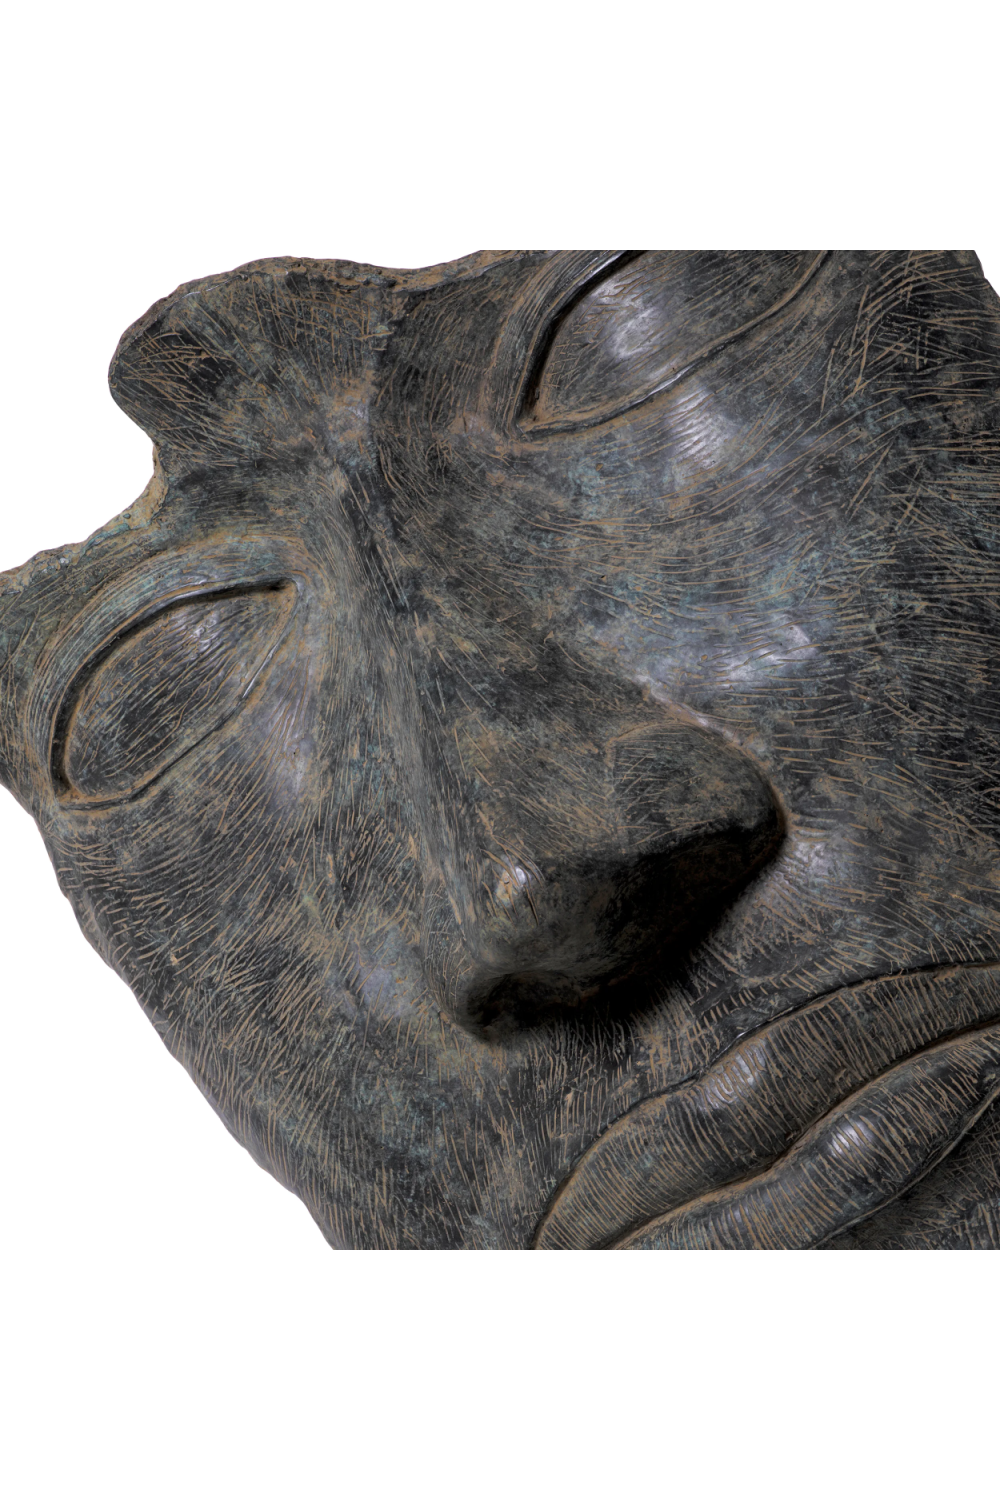 Antique Bronze Face Sculpture | Eichholtz Heros | Oroa.com